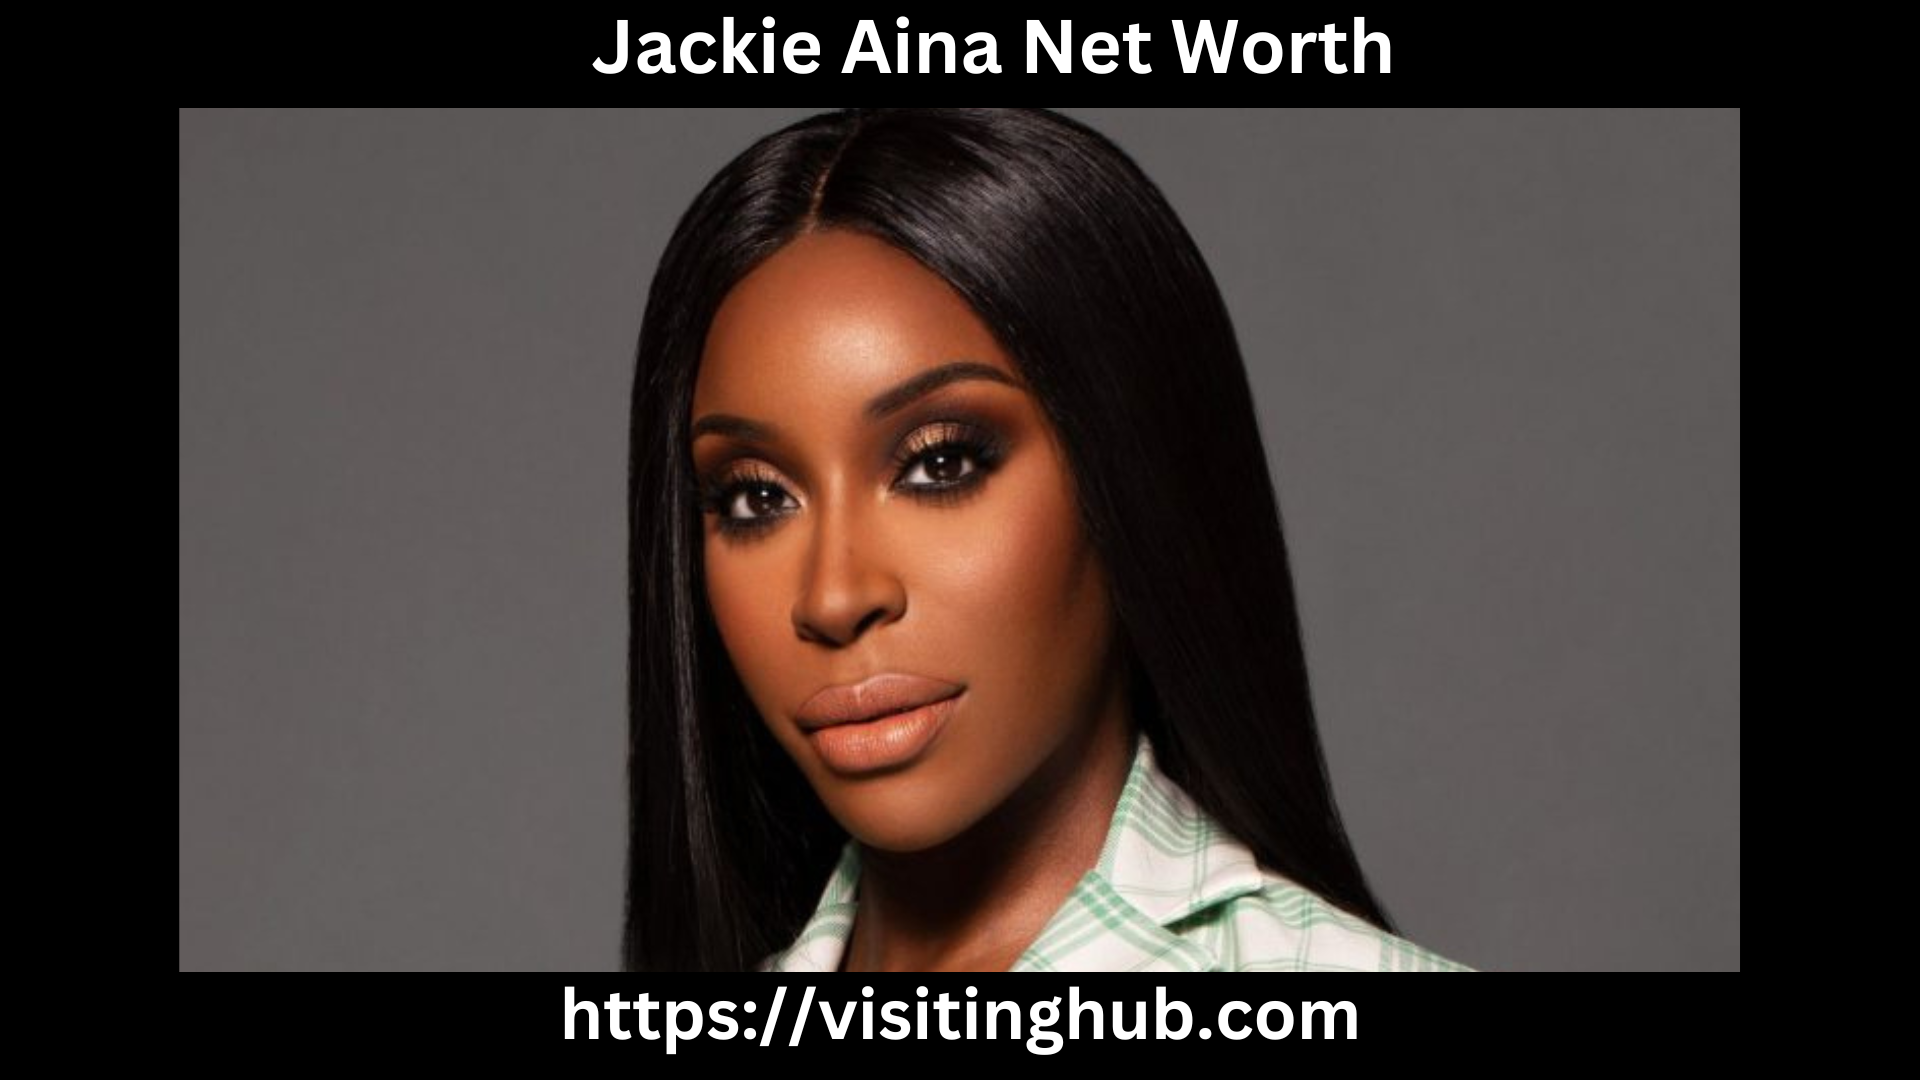 Jackie Aina Net Worth